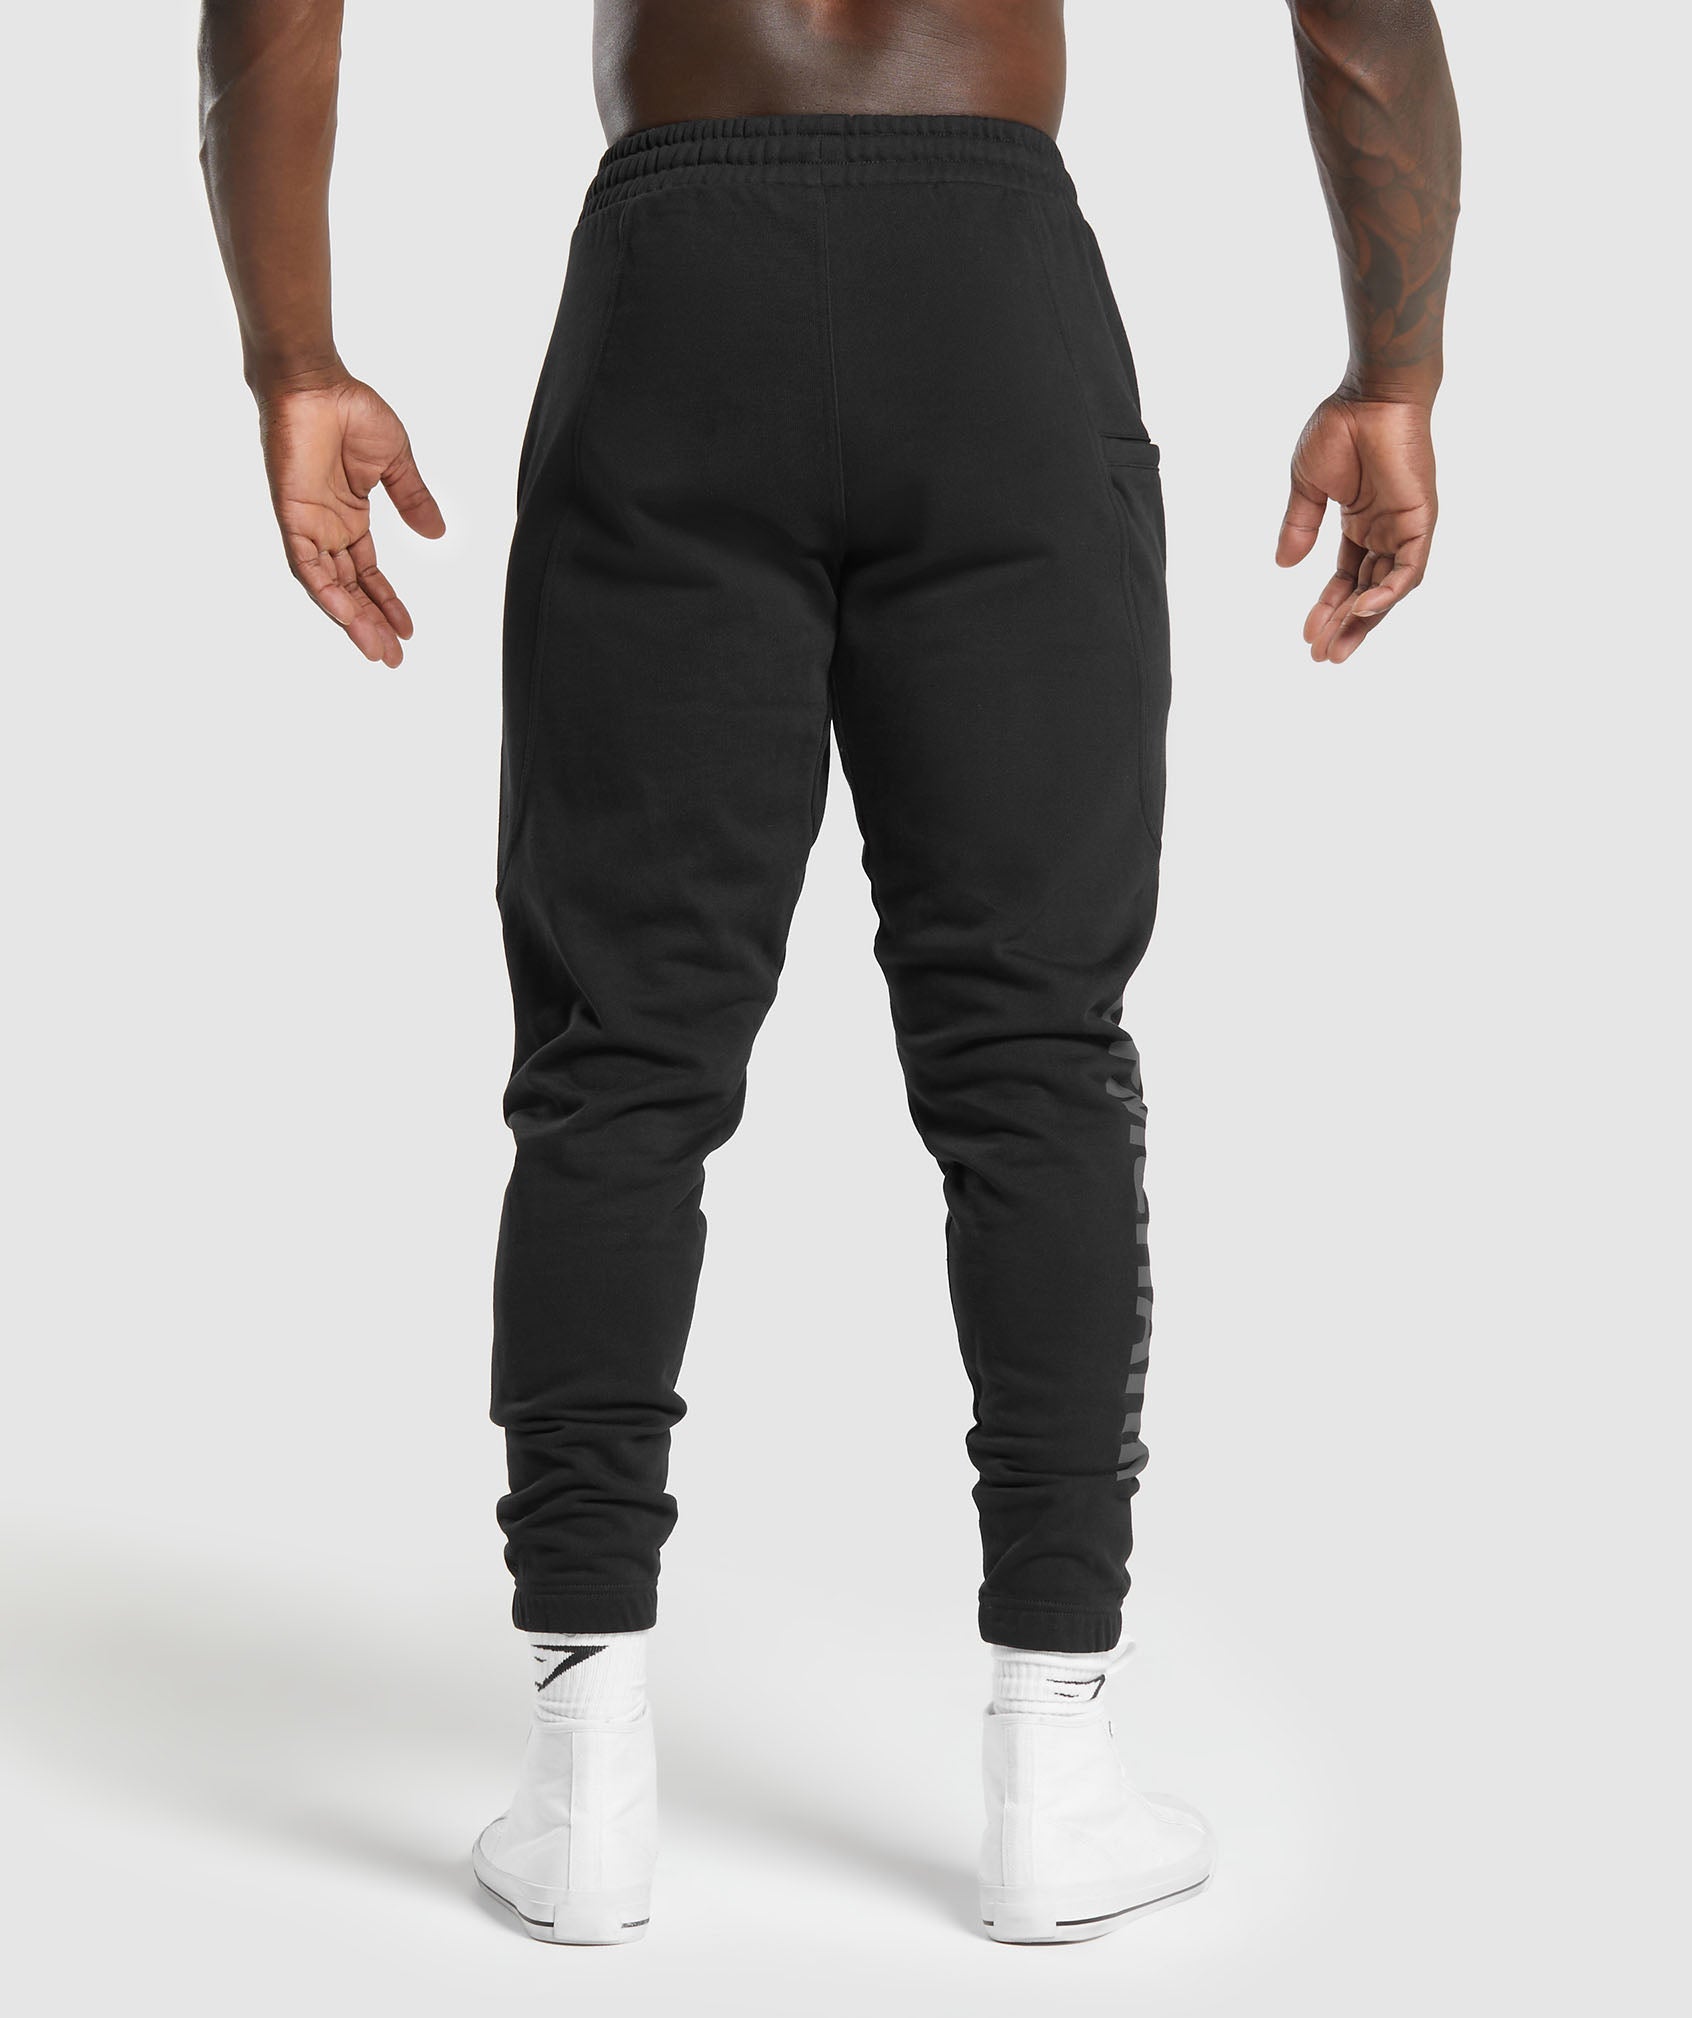 Gymshark, Pants, Gymshark Black Crest Joggers Mens Large Slim Fit Brushed  Fabric Loungewear Pants